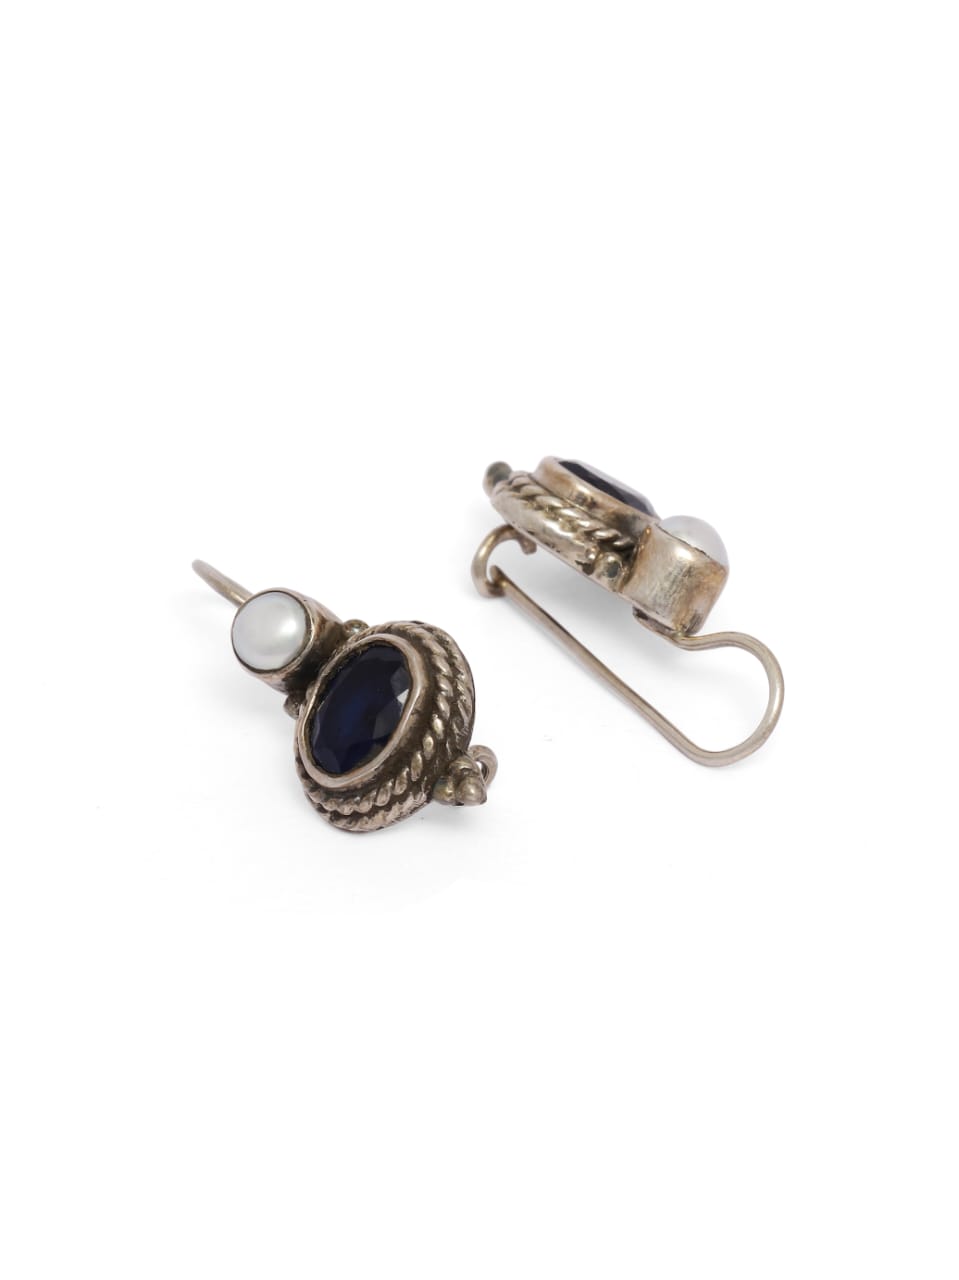 Pearl black Onyx sterling Silver earrings.